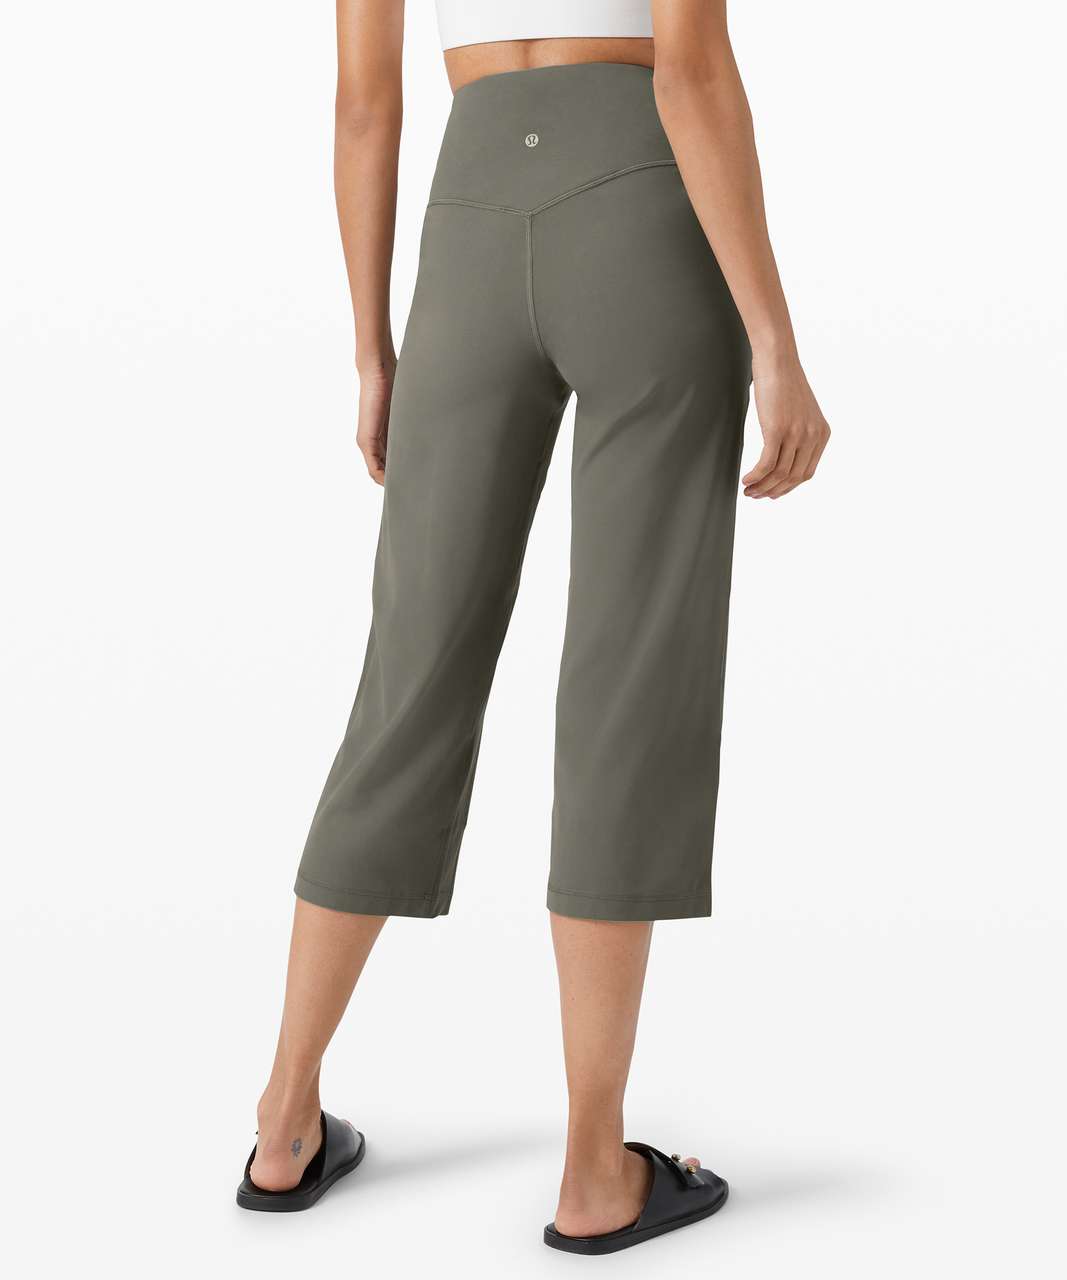 Lululemon Align™ High-Rise Wide-Leg Cropped Pant 23, Women's Capris